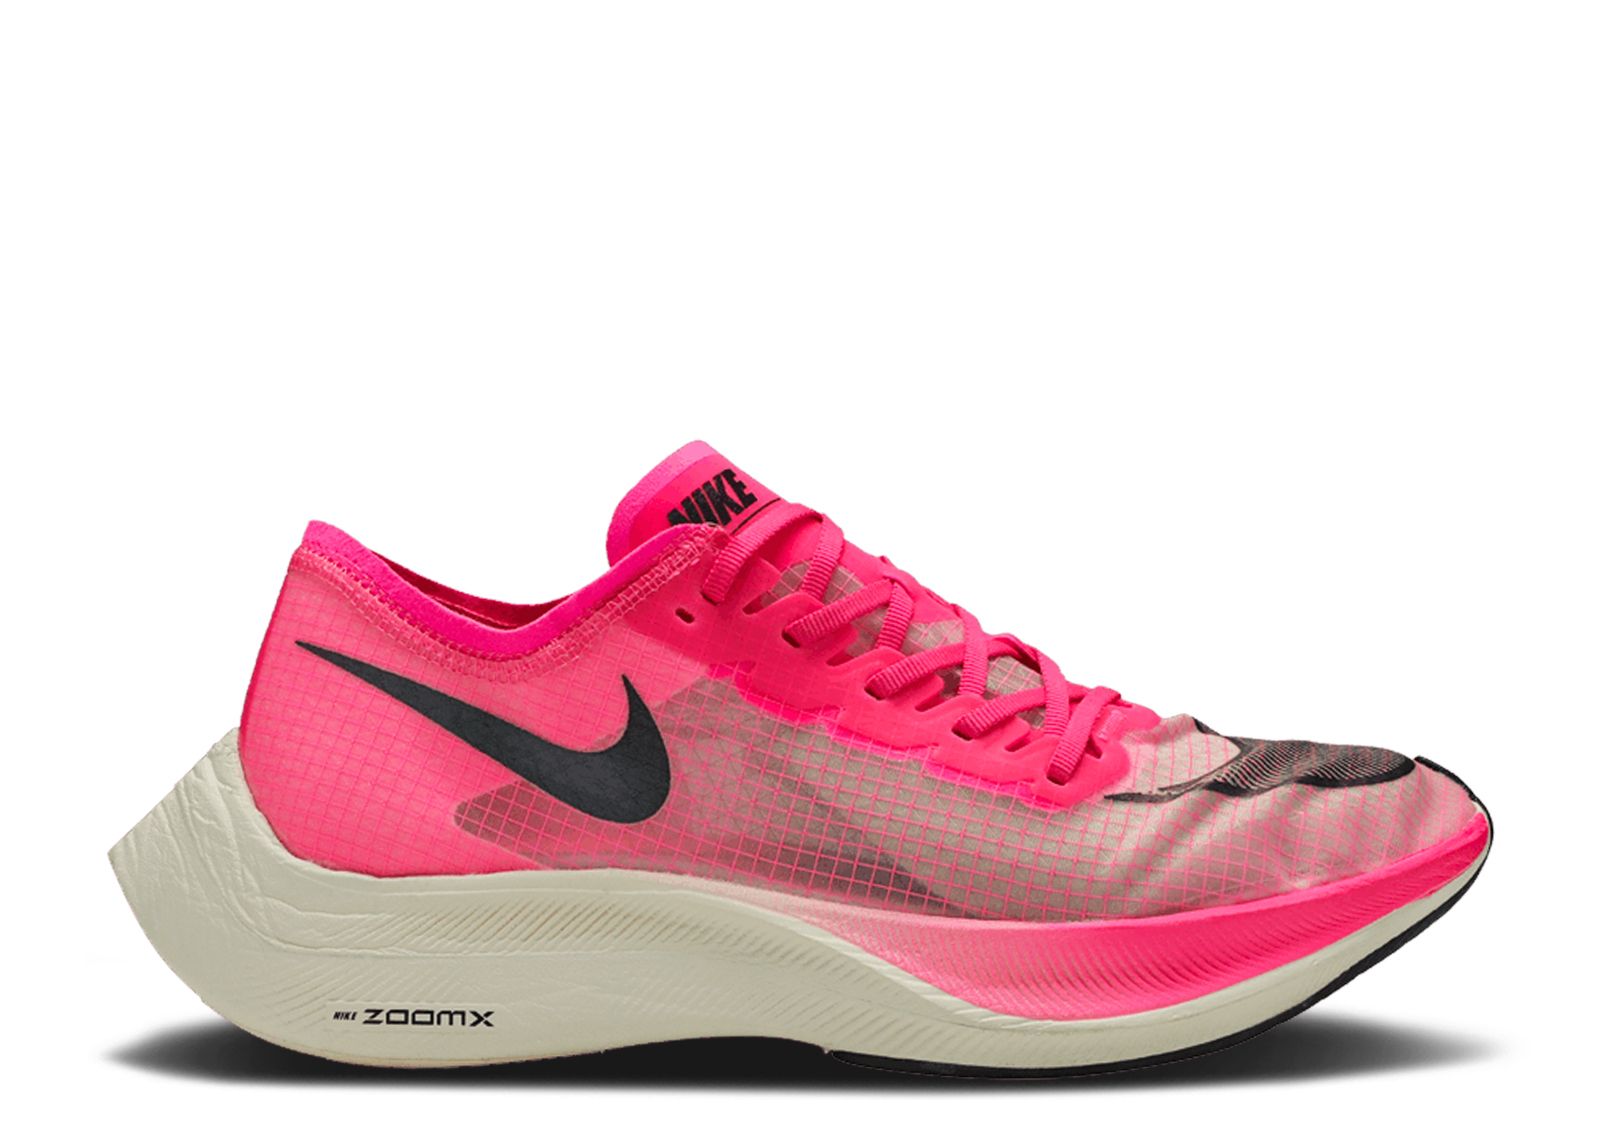 Ver a través de Felicidades cero ZoomX Vaporfly NEXT% 'Pink Blast' - Nike - AO4568 600 - pink blast/guava  ice/black | Flight Club